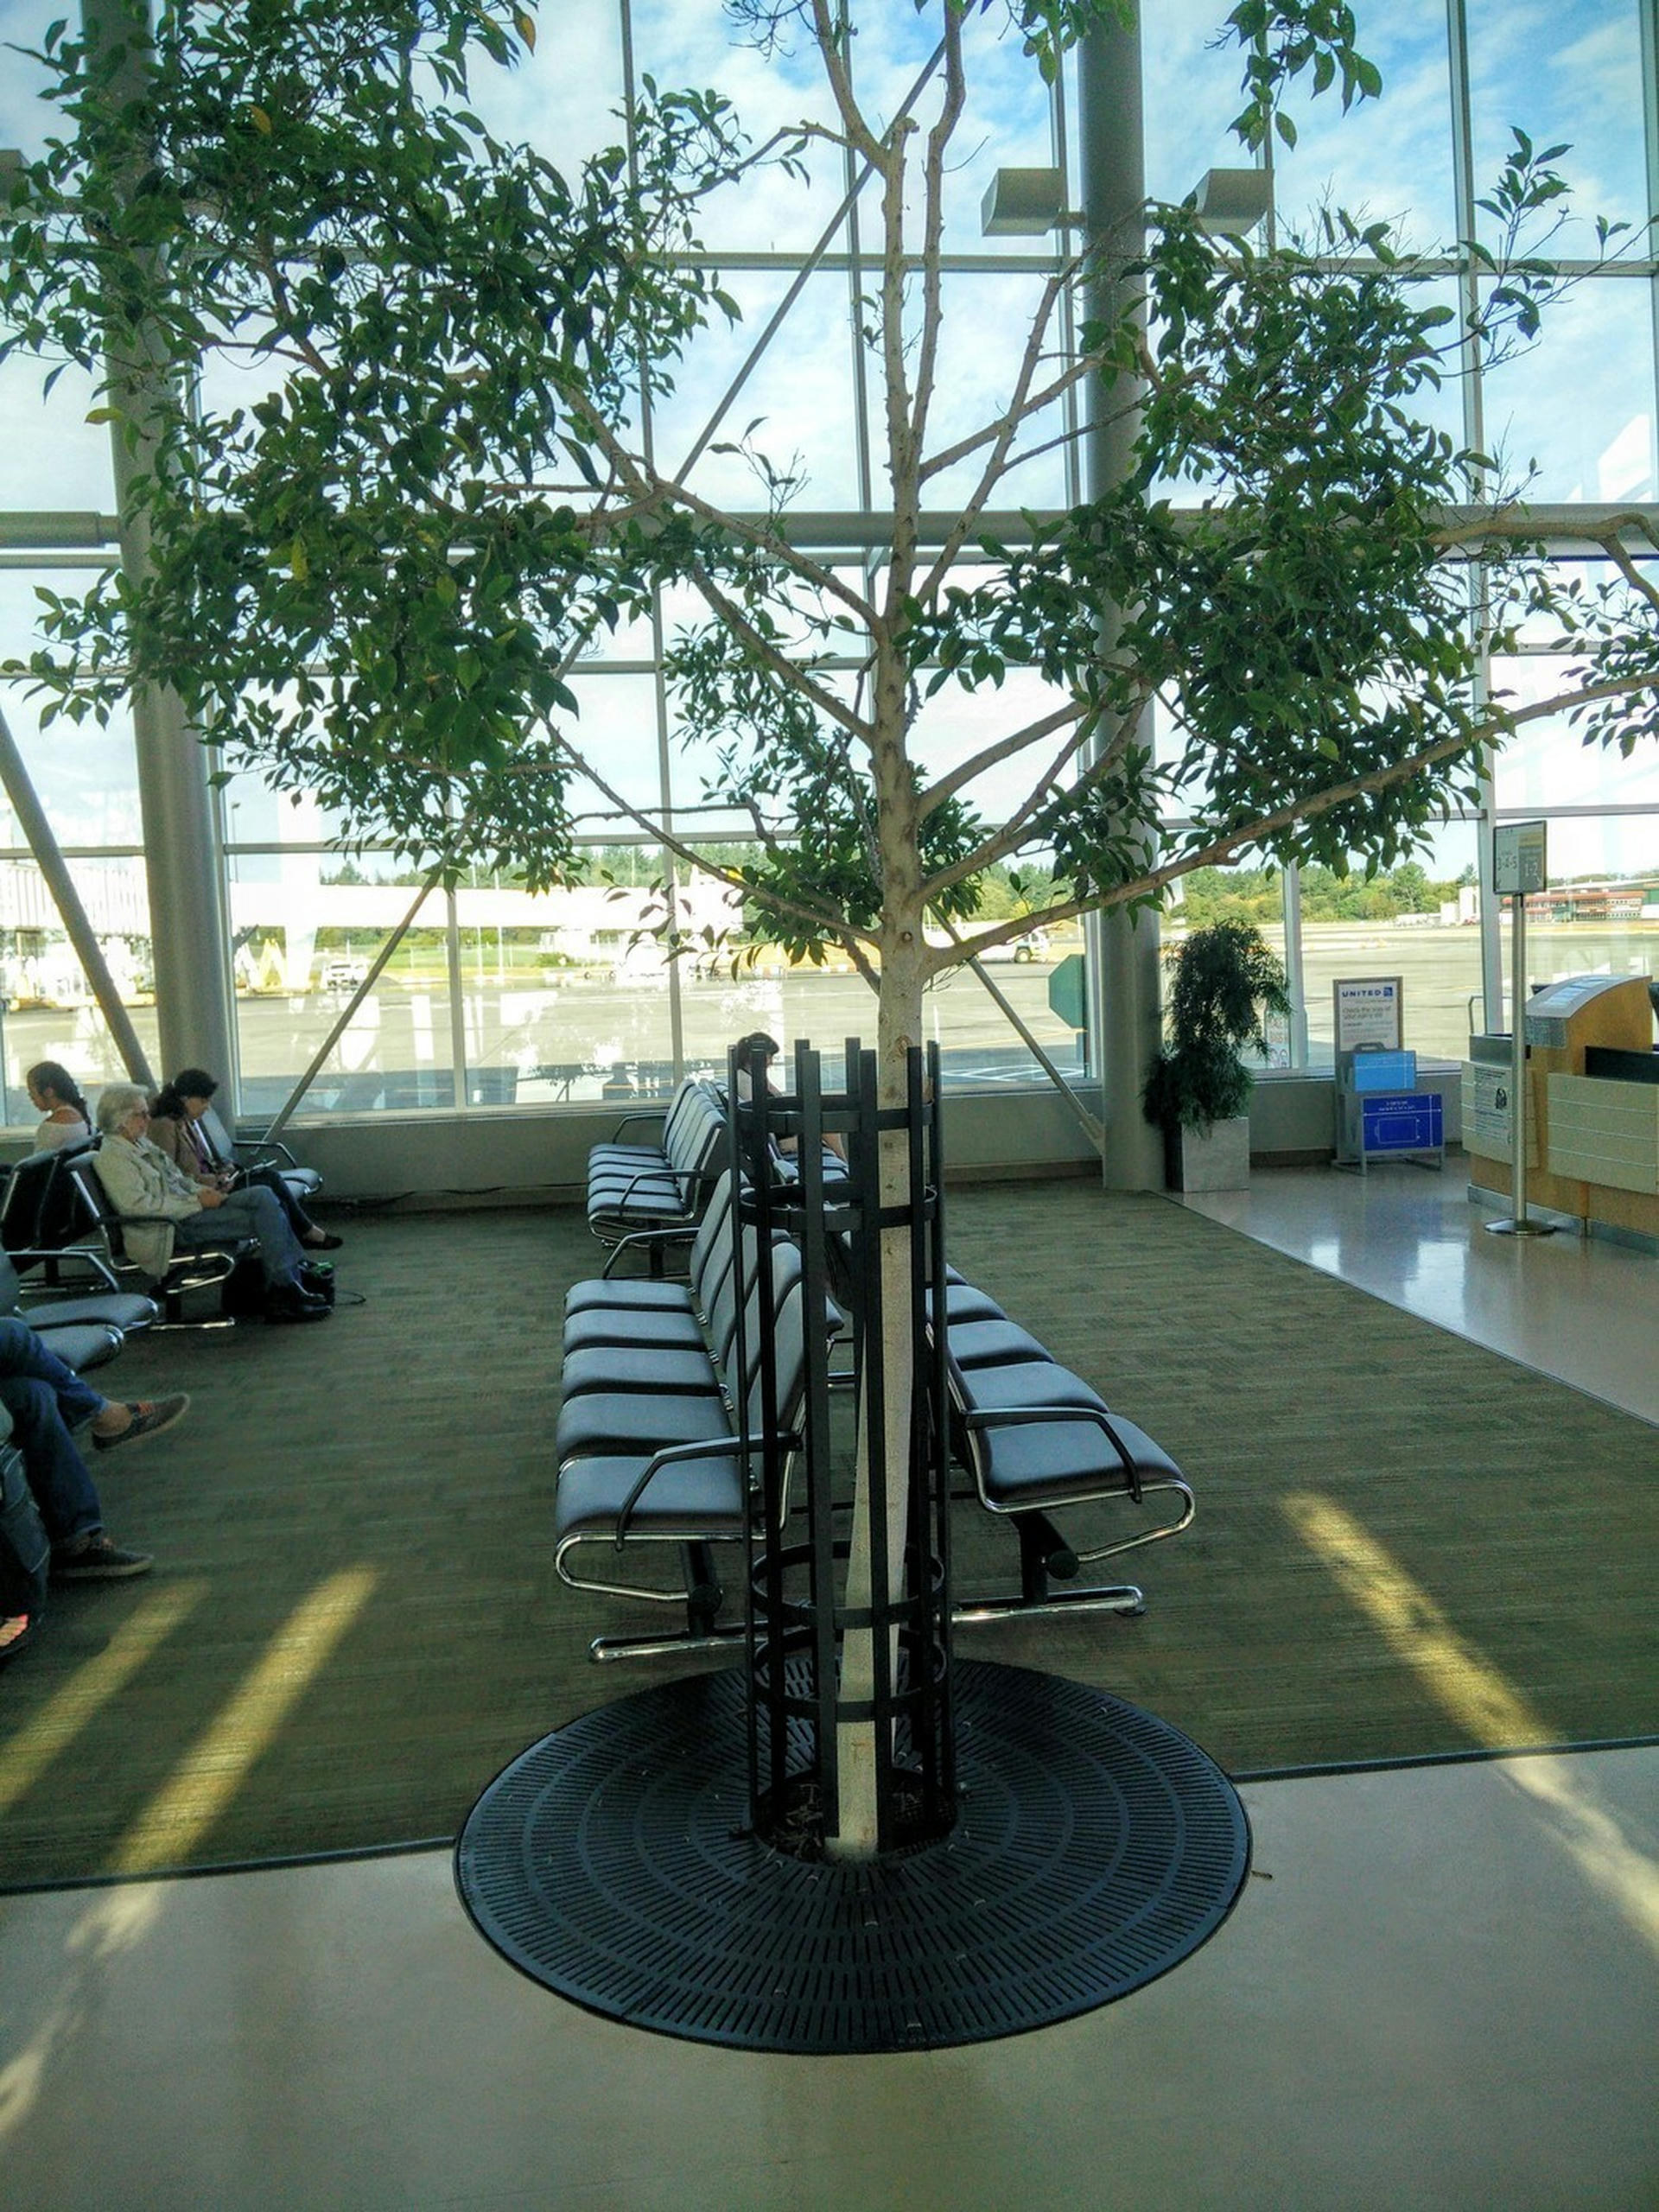 Victoria's Airport has trees growing in the floor.